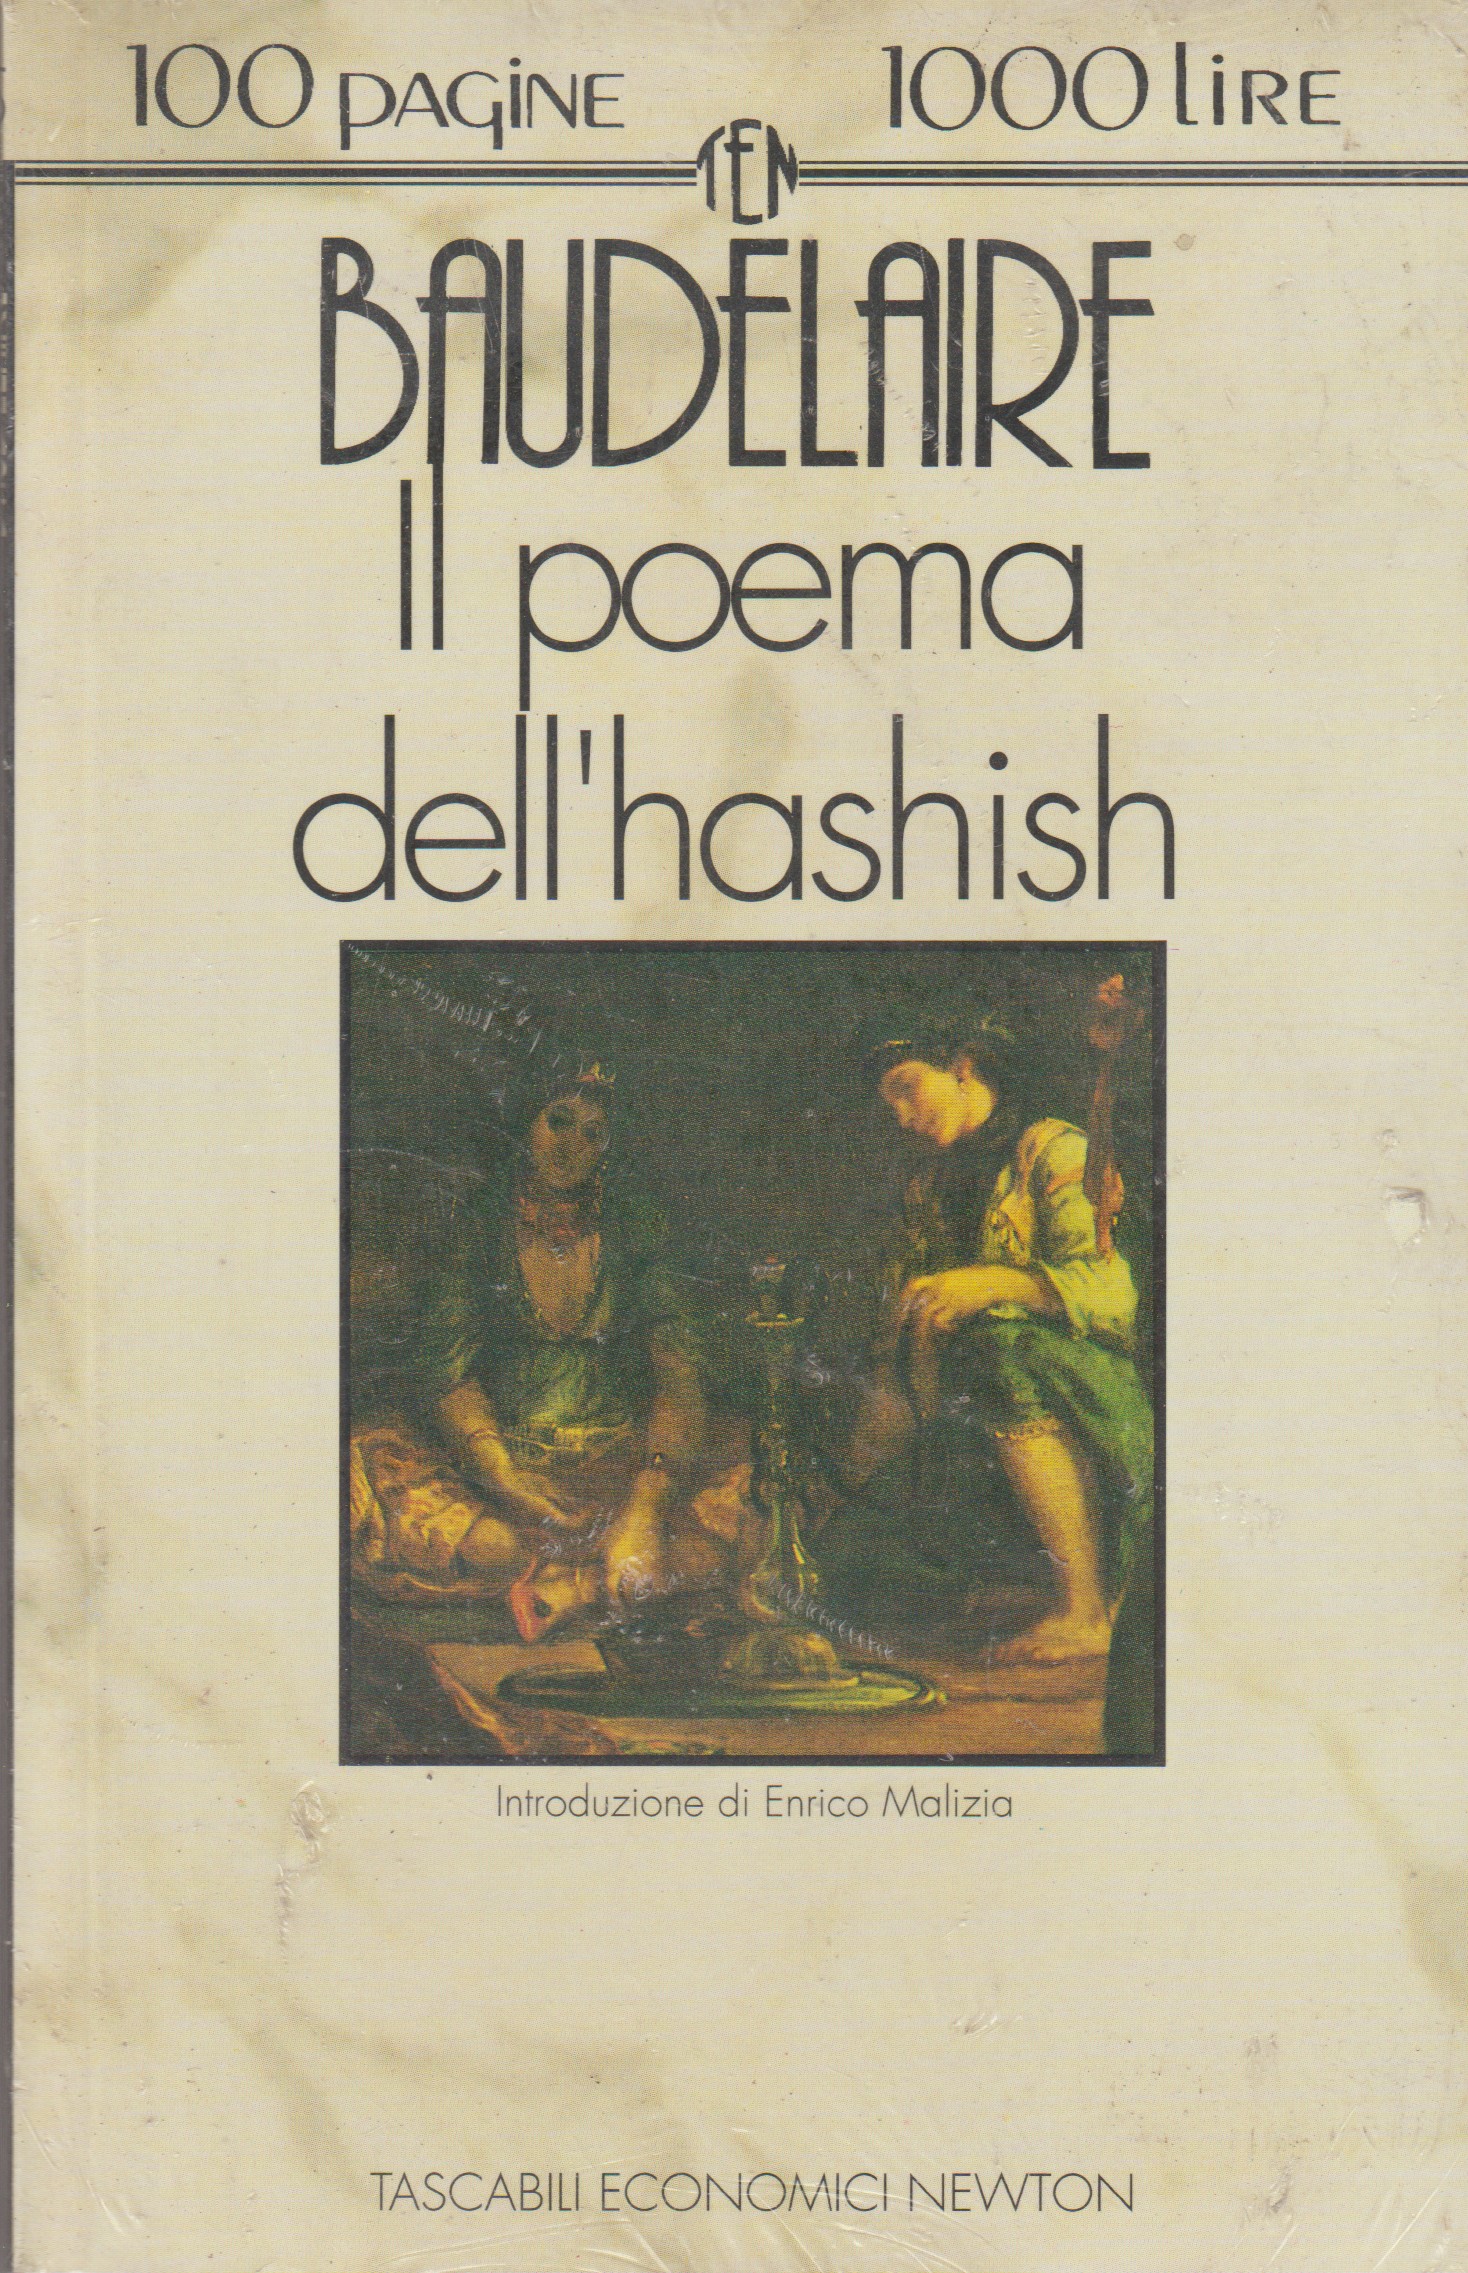 Baudelaire il poema dell'hashish